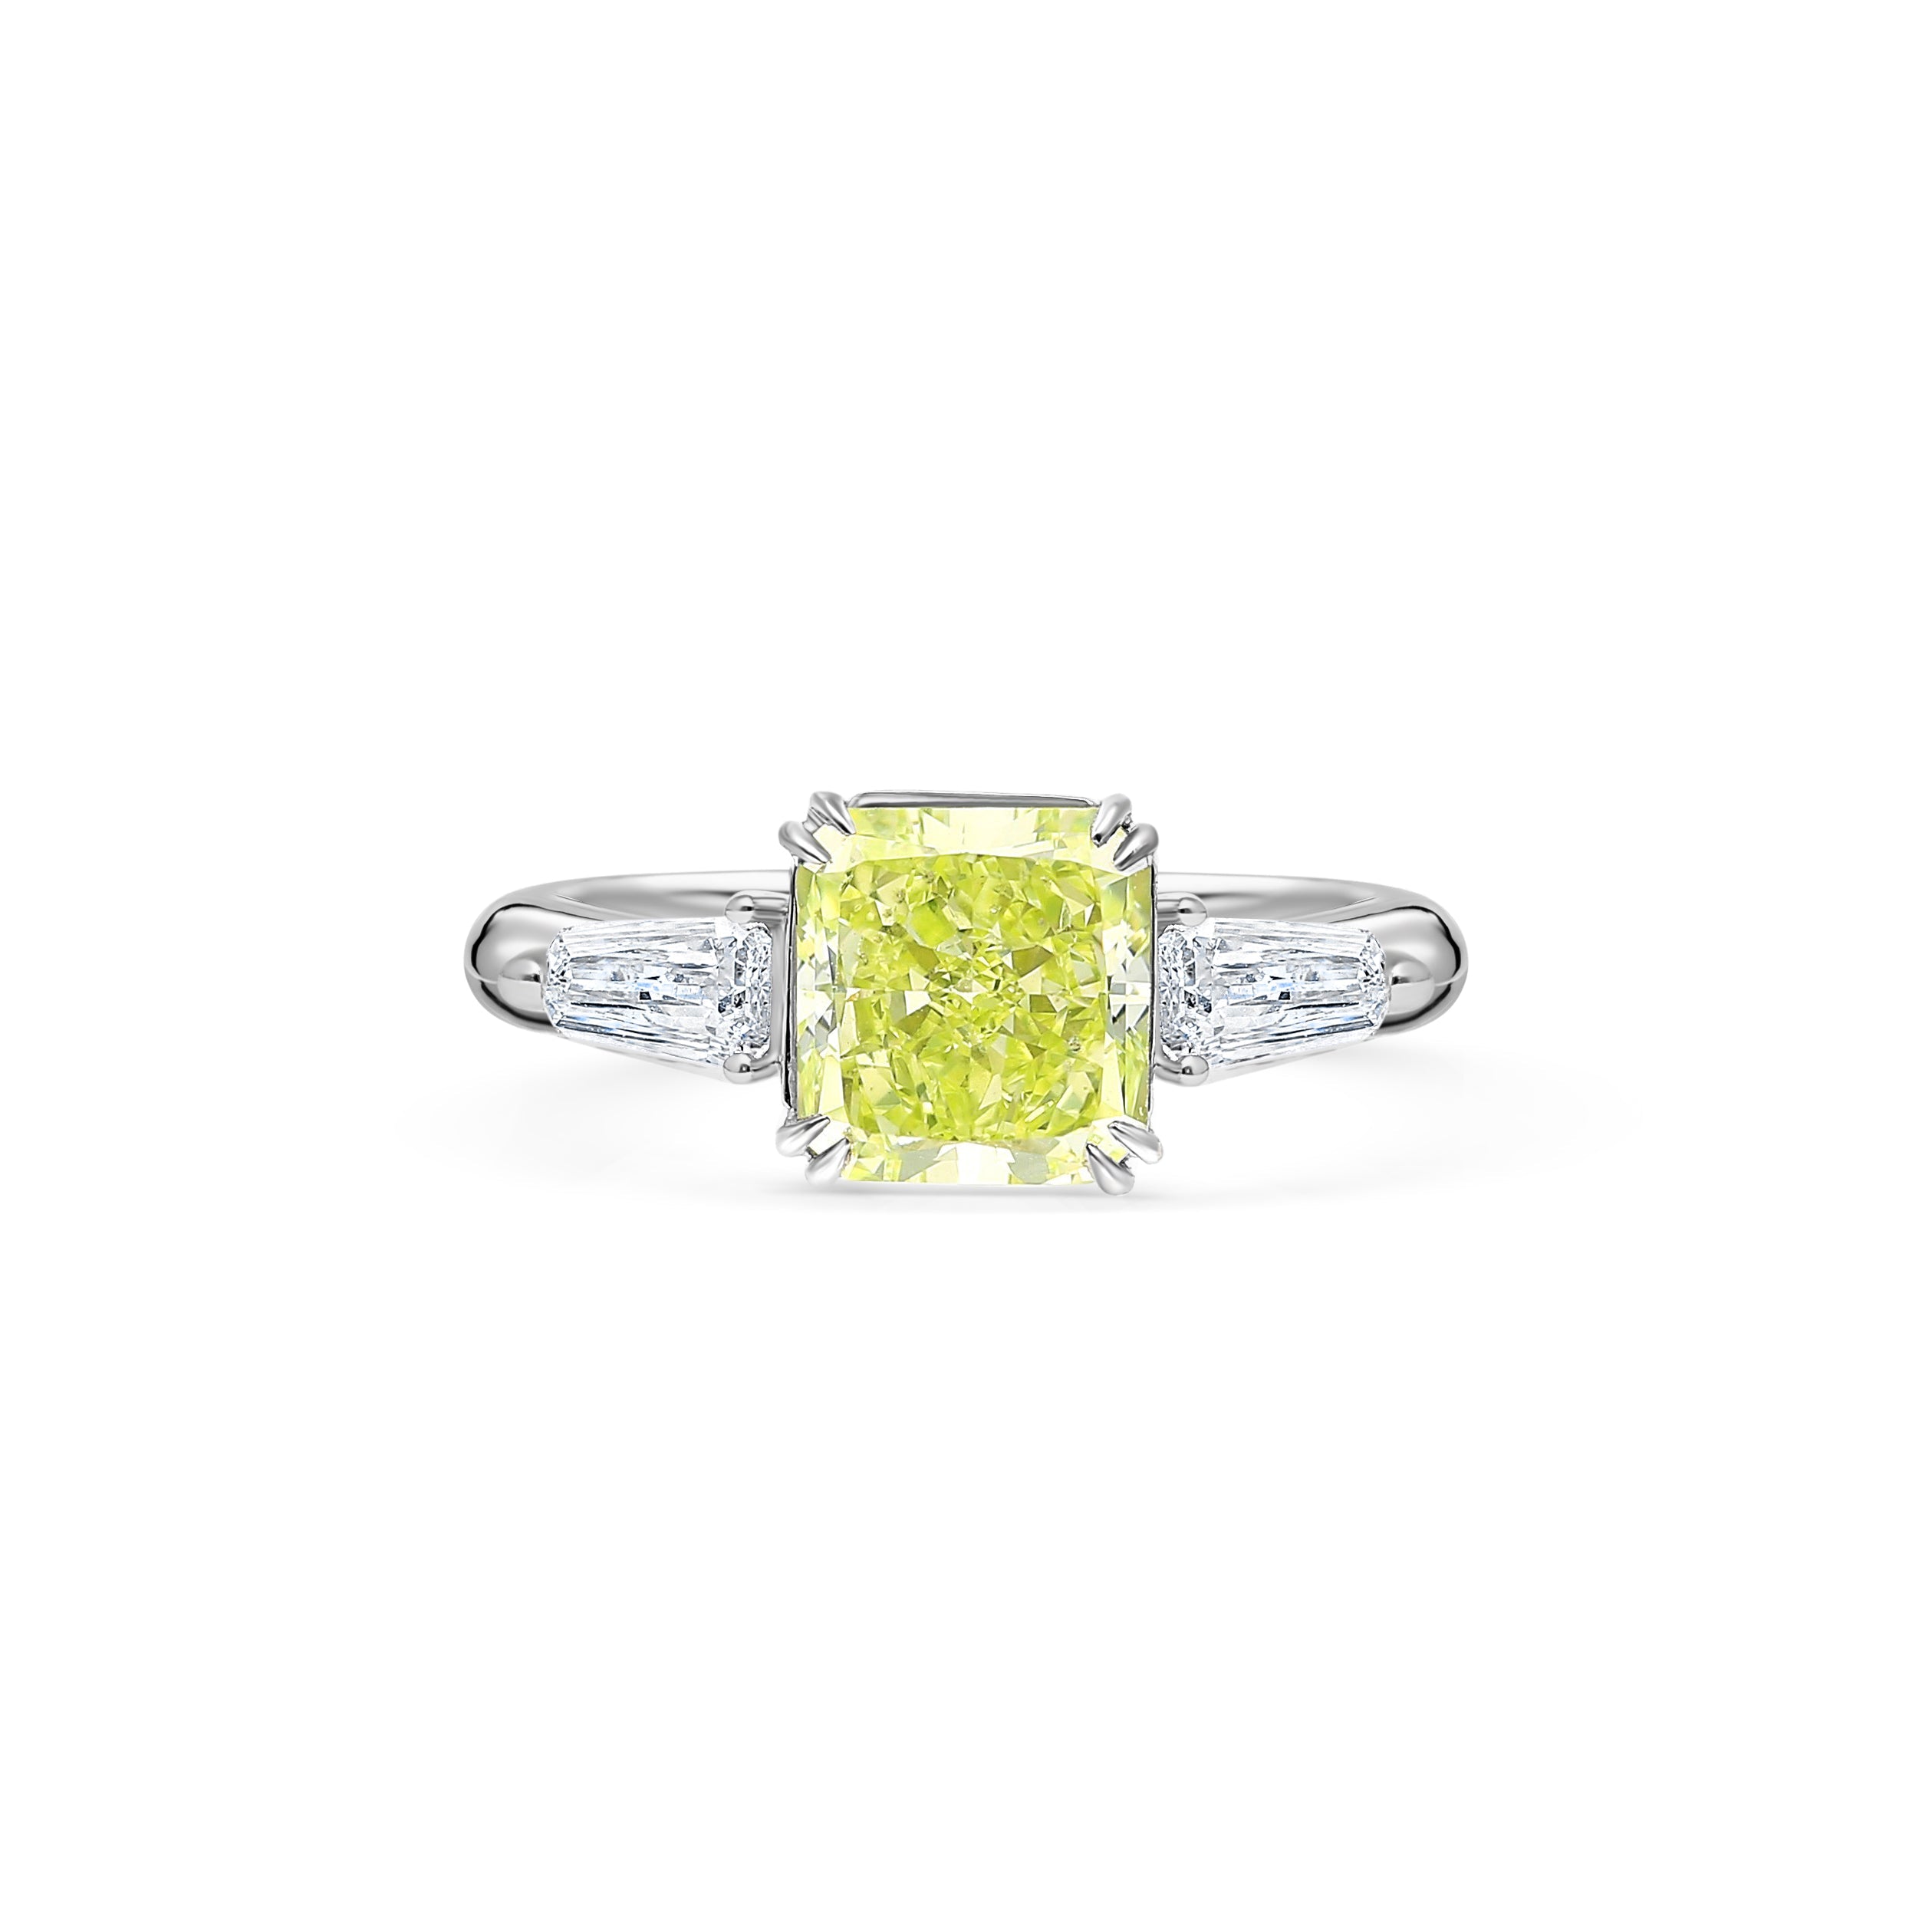 GIA Certified 2.22 Carat Fancy Yellow-Green Radiant Cut Diamond 3 Stone  Ring in 18K White Gold